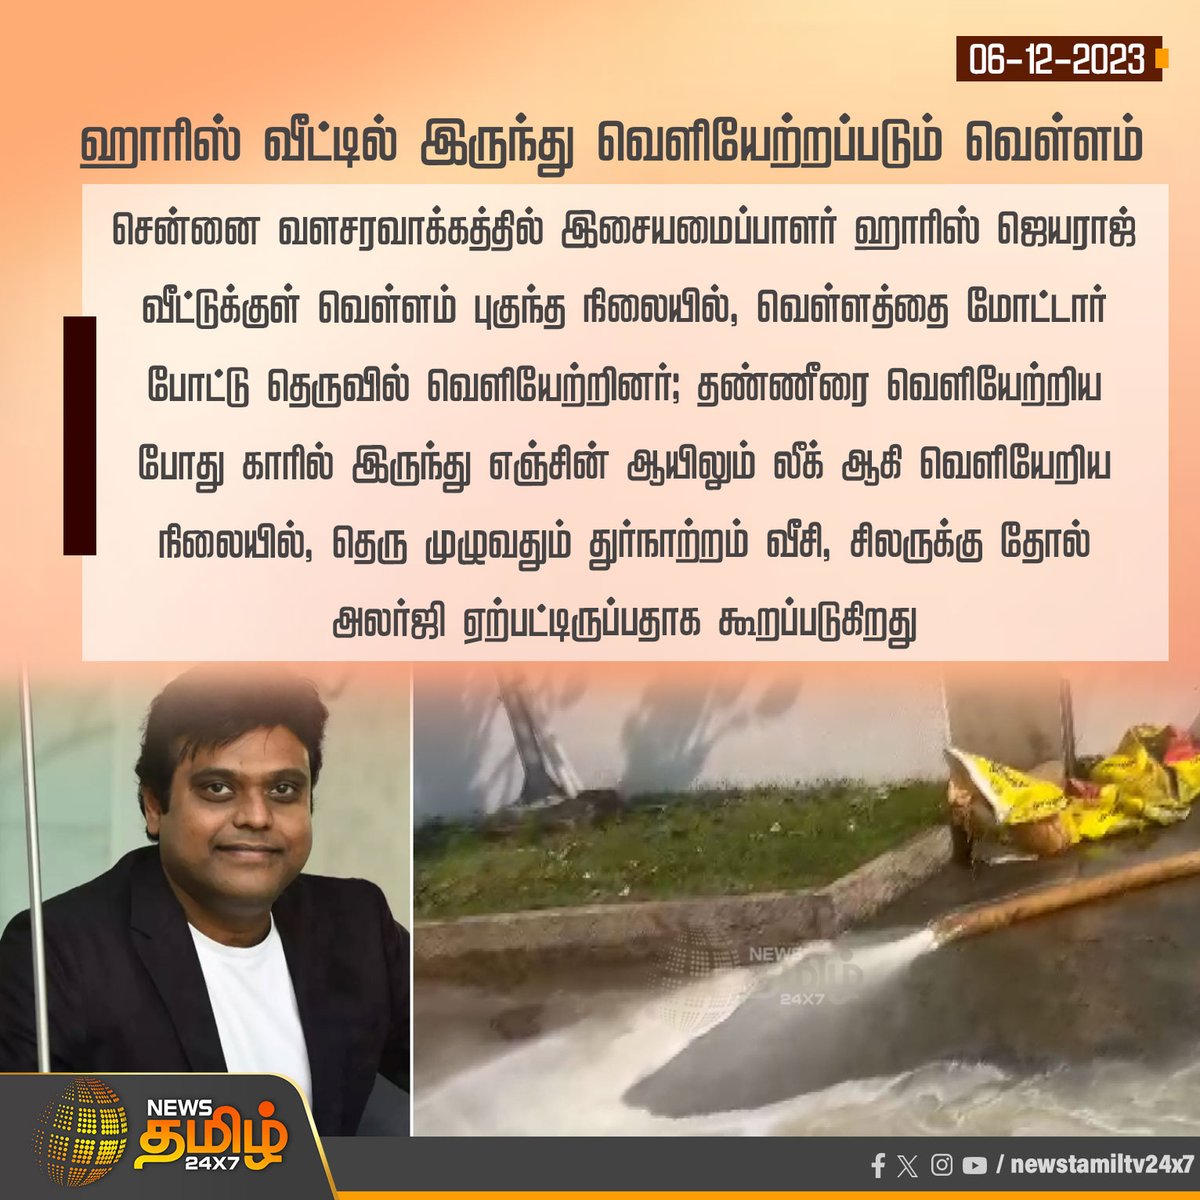 #NewsUpdate | ஹாரிஸ் வீட்டில் இருந்து வெளியேற்றப்படும் வெள்ளம் 

#HarrisJayaraj | #ChennaiFloods2023 | #ChennaiRain | #NewsTamil24x7 | #PetrolLeak | #Skinallergy